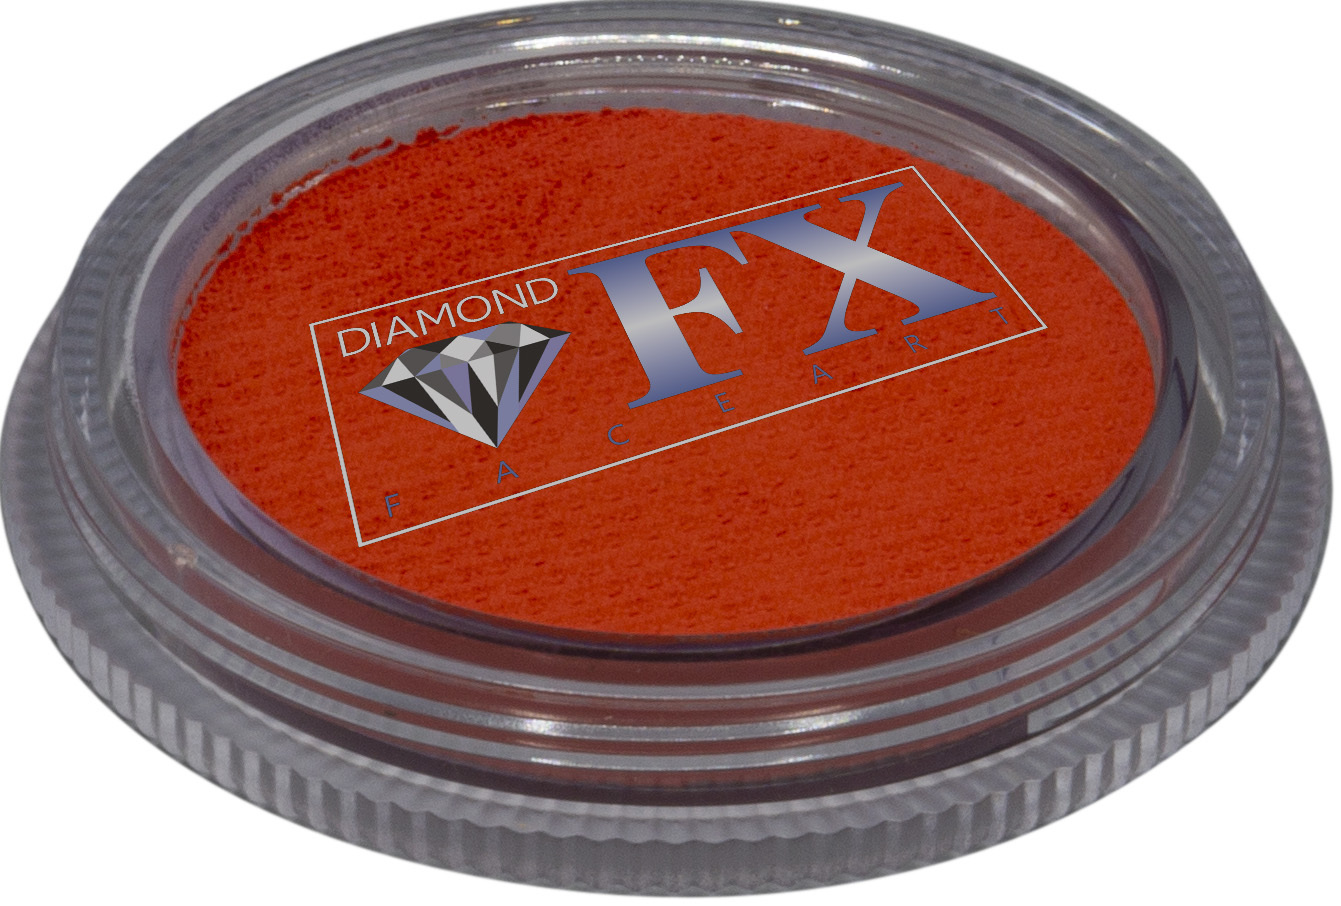 Diamond FX Orange 30g - Small Image